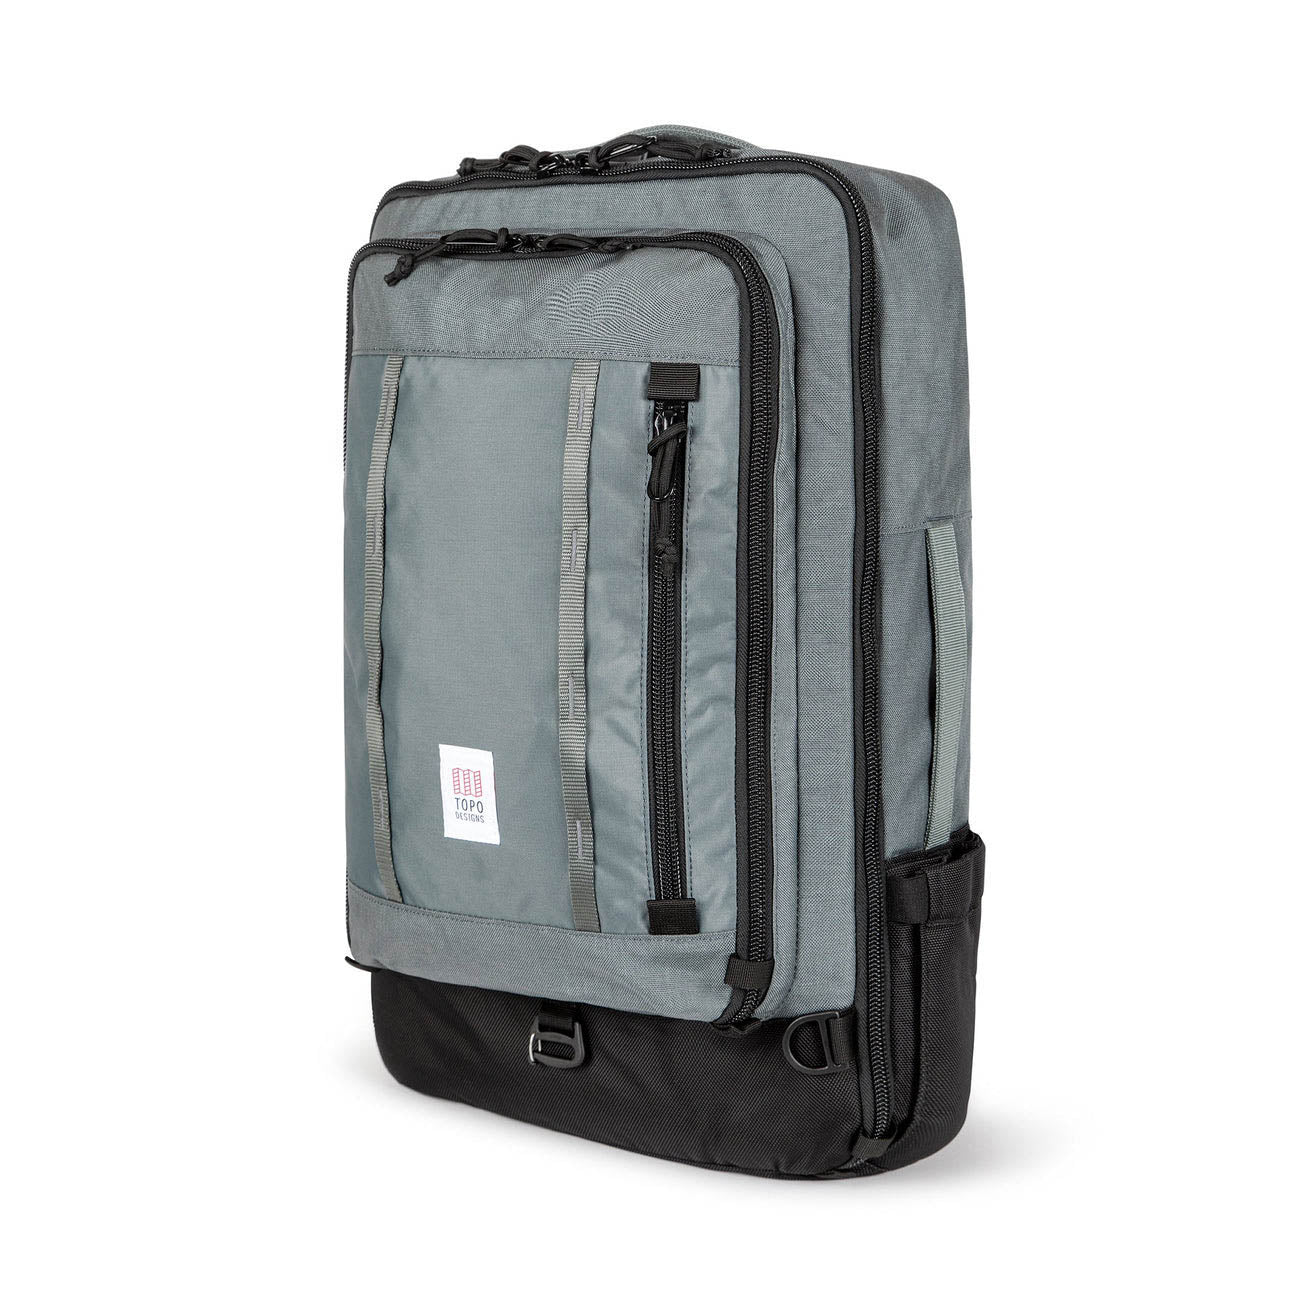 Valise - Global Travel Bag - 40 Litres - Charcoal